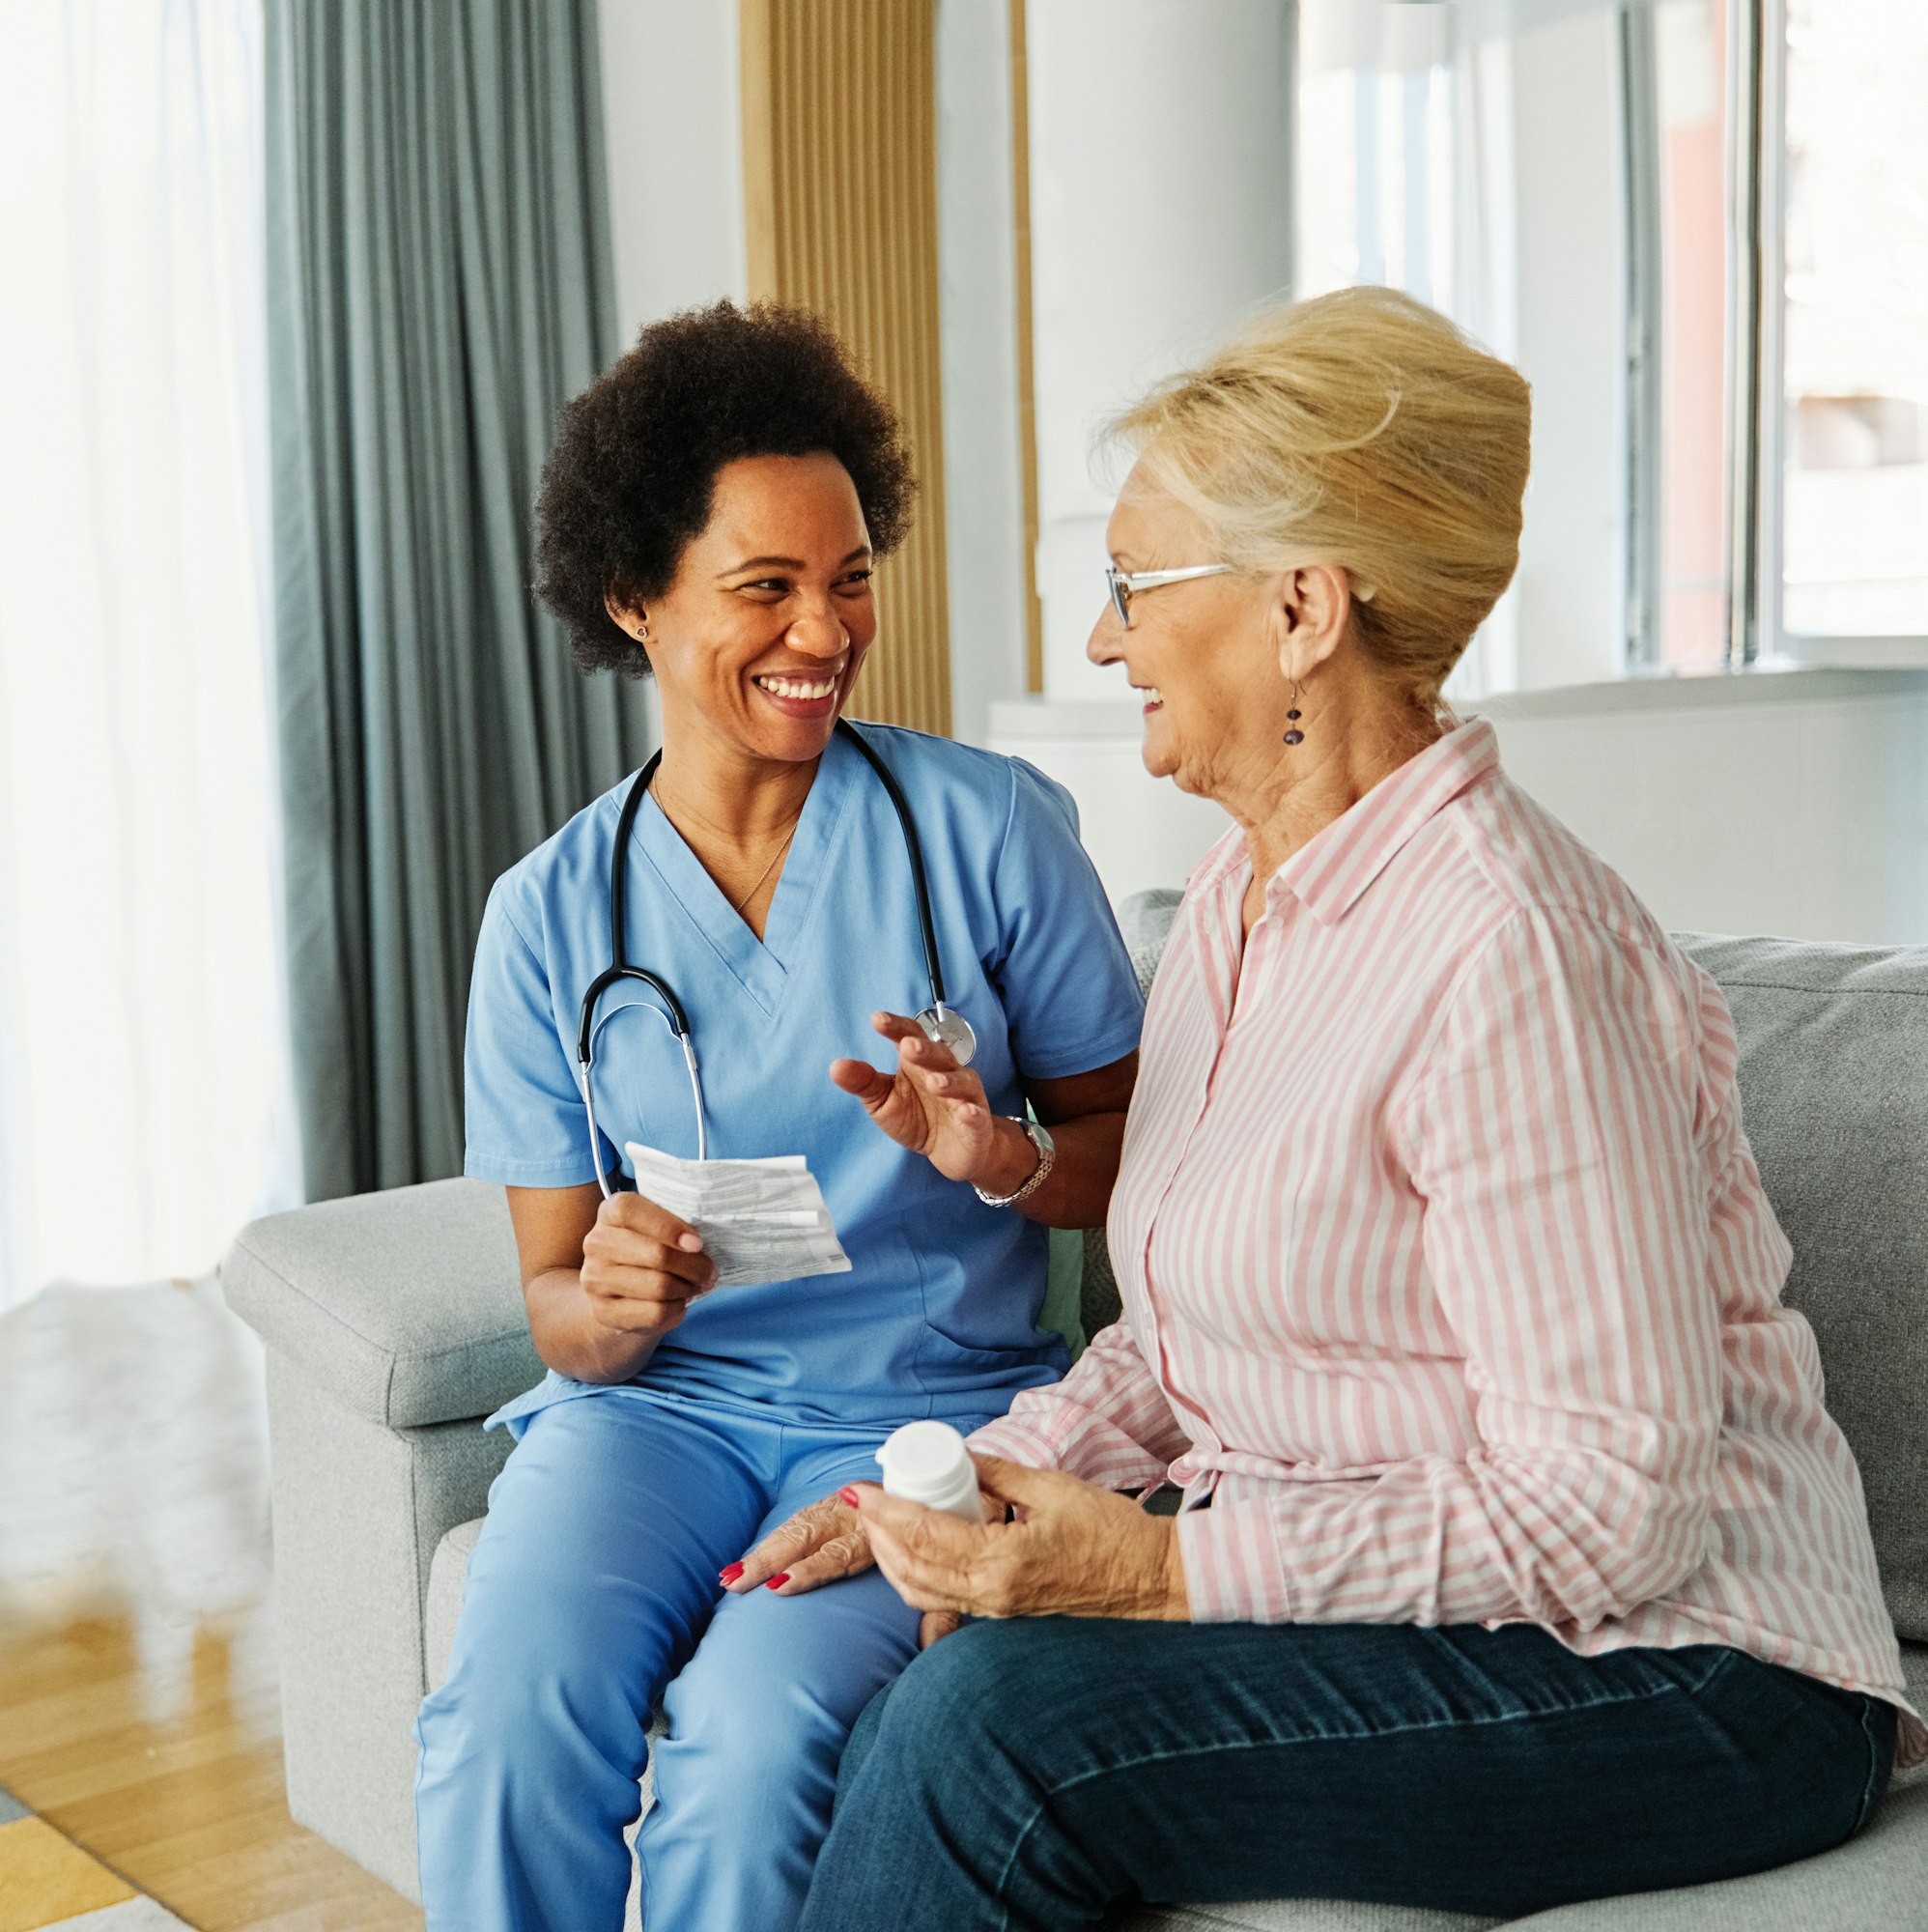 nurse doctor senior care drug pill tablet prescription caregiver help assistence retirement home